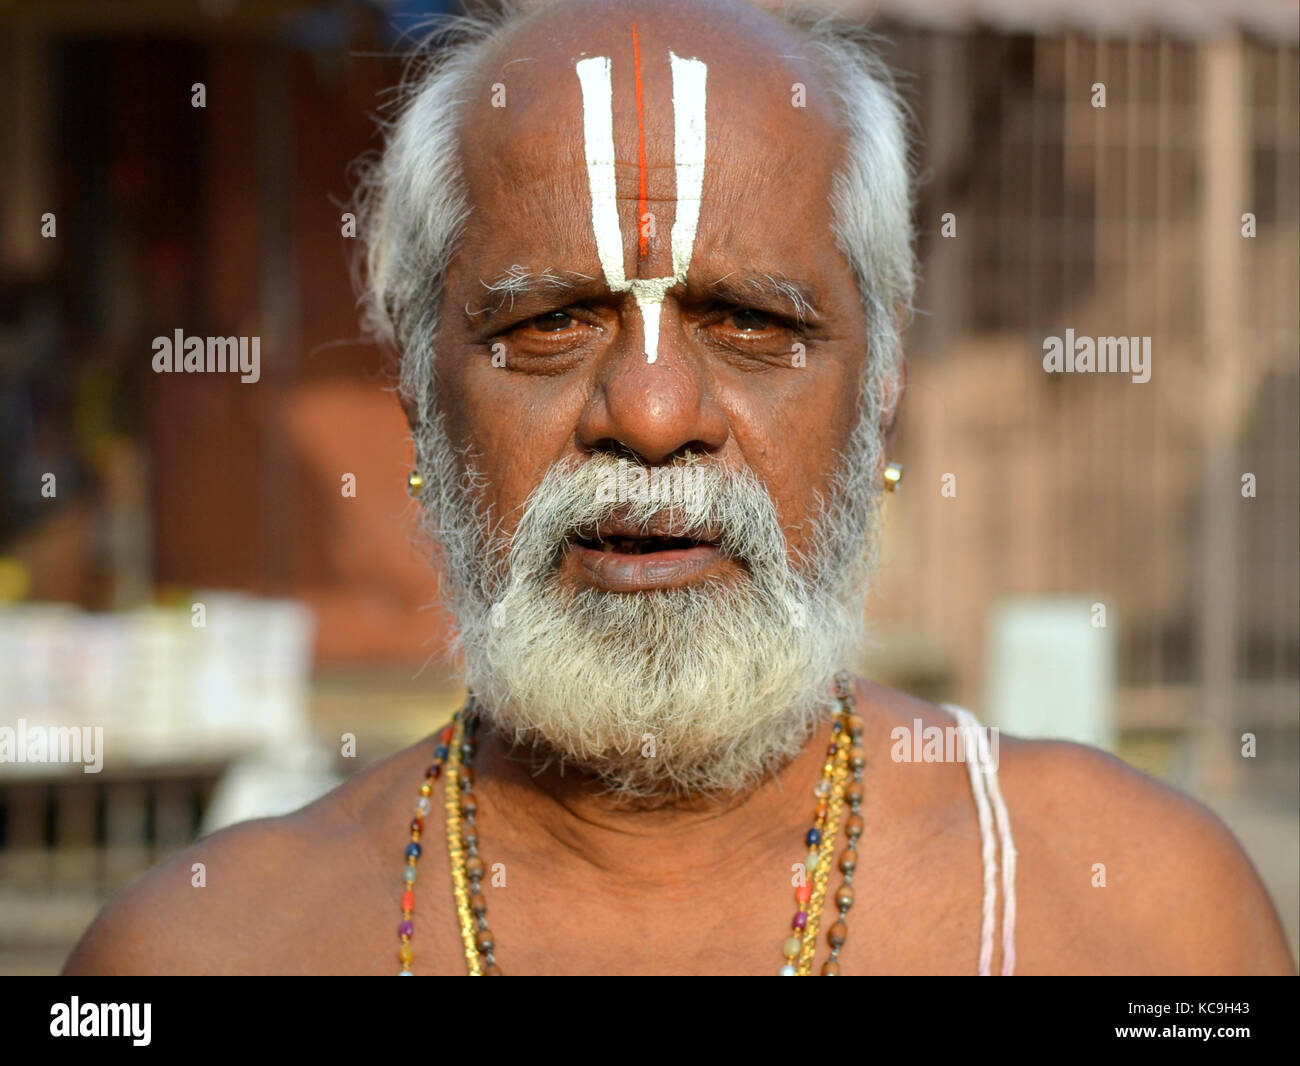 Old Indian Hindu pilgrim (Vaishnavite devotee who worships Vishnu) with distinctive urdhva pundra (U-shaped tilaka mark) on his forehead. Stock Photo